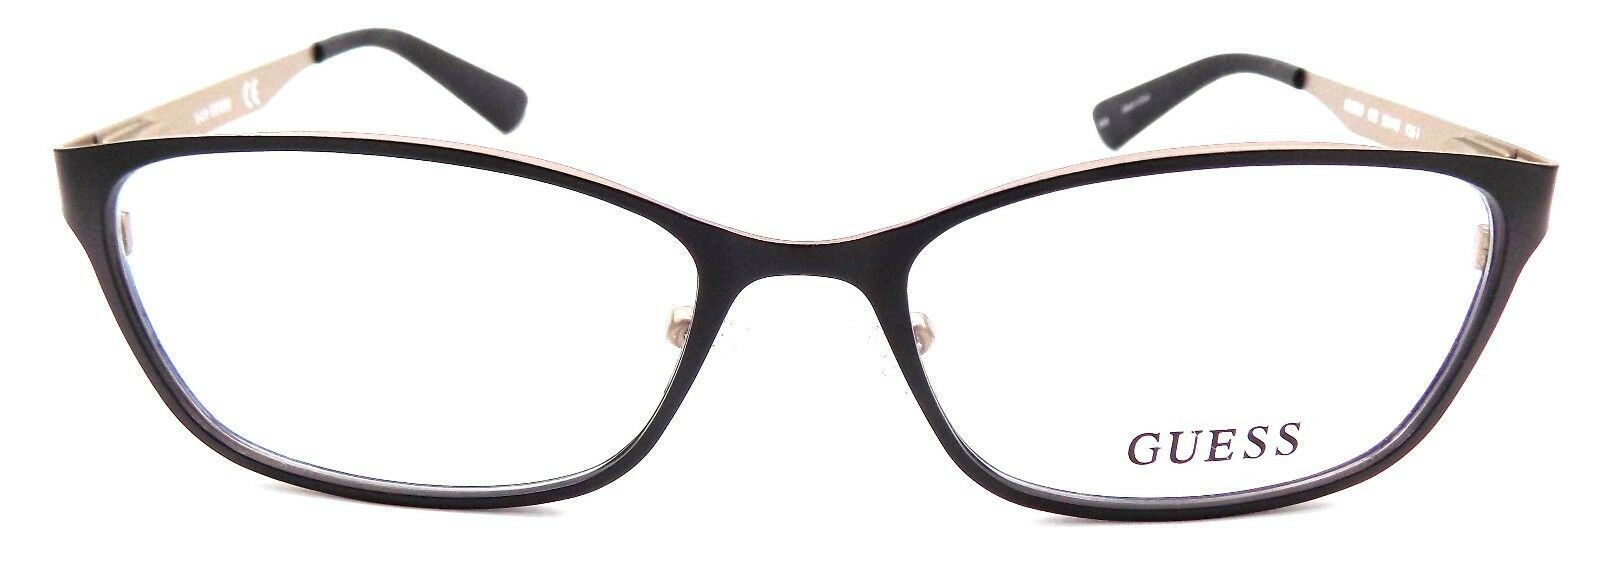 2-GUESS GU2563 002 Women's Eyeglasses Frames Metal 52-16-135 Matte Black + CASE-664689787876-IKSpecs